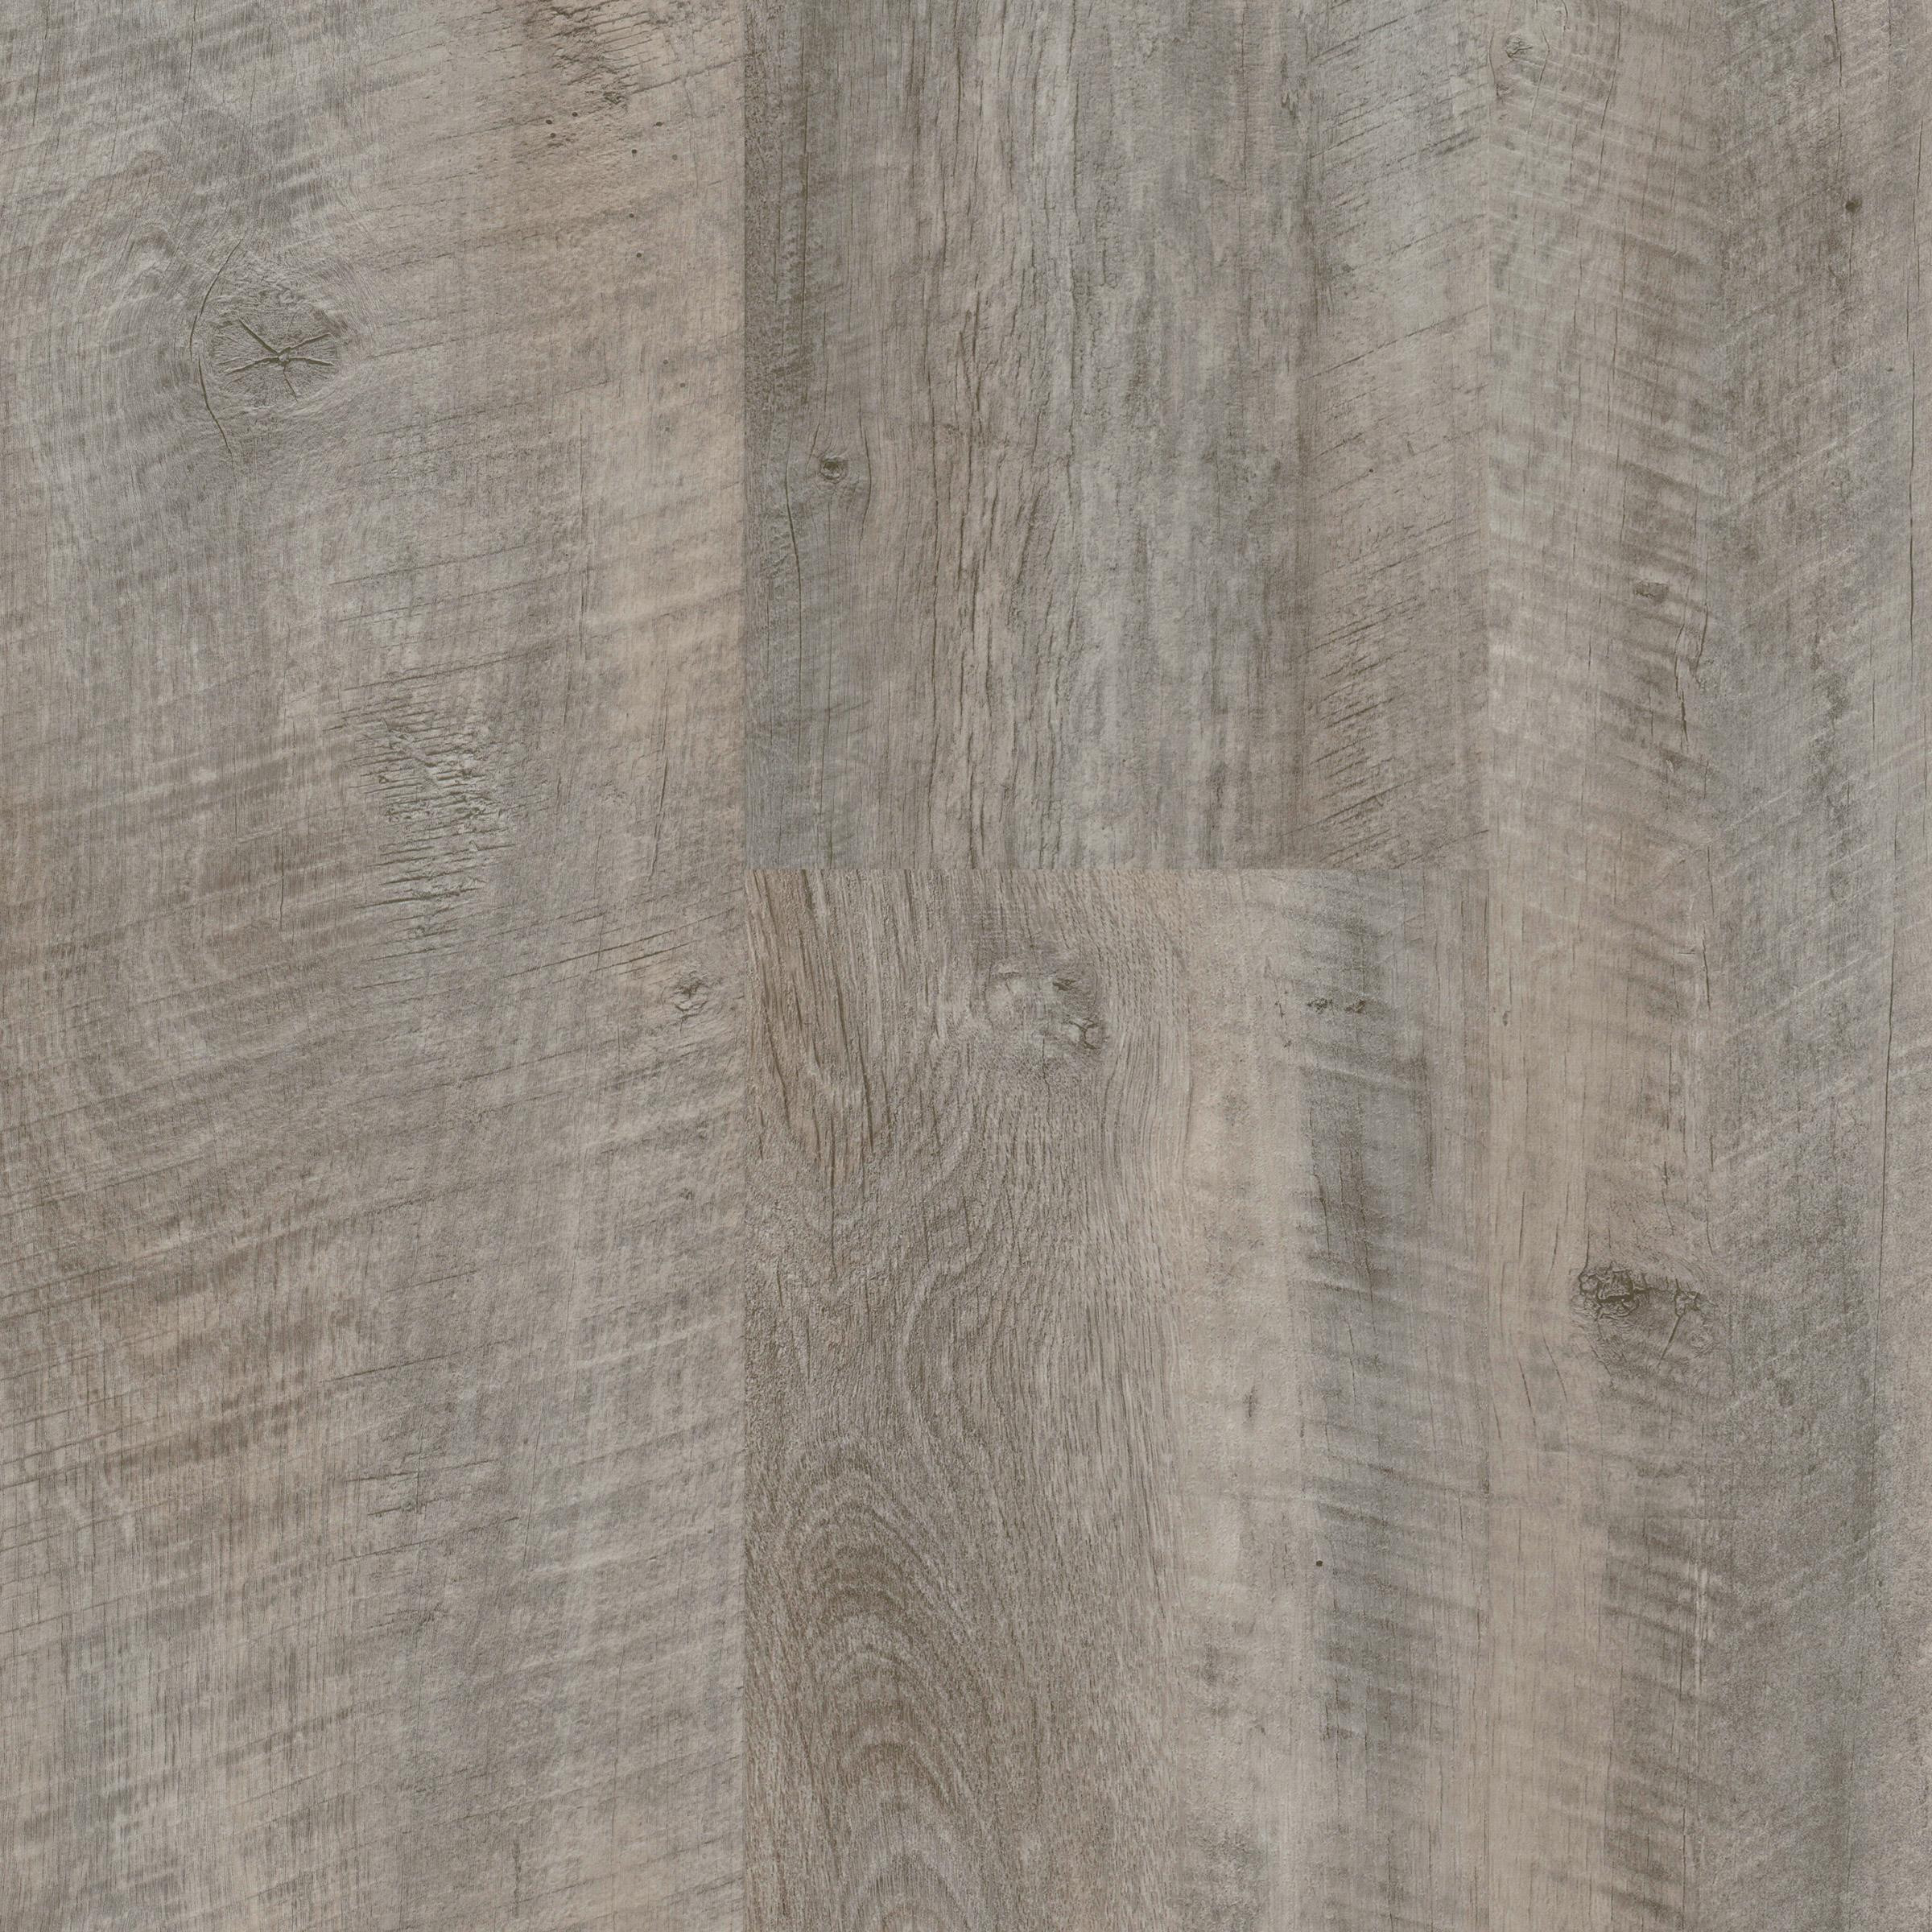 how to install wide plank hardwood flooring of moduleo flintsteel oak 9 wide glue down luxury vinyl plank flooring pertaining to 360524 9 25 x 59 new approved